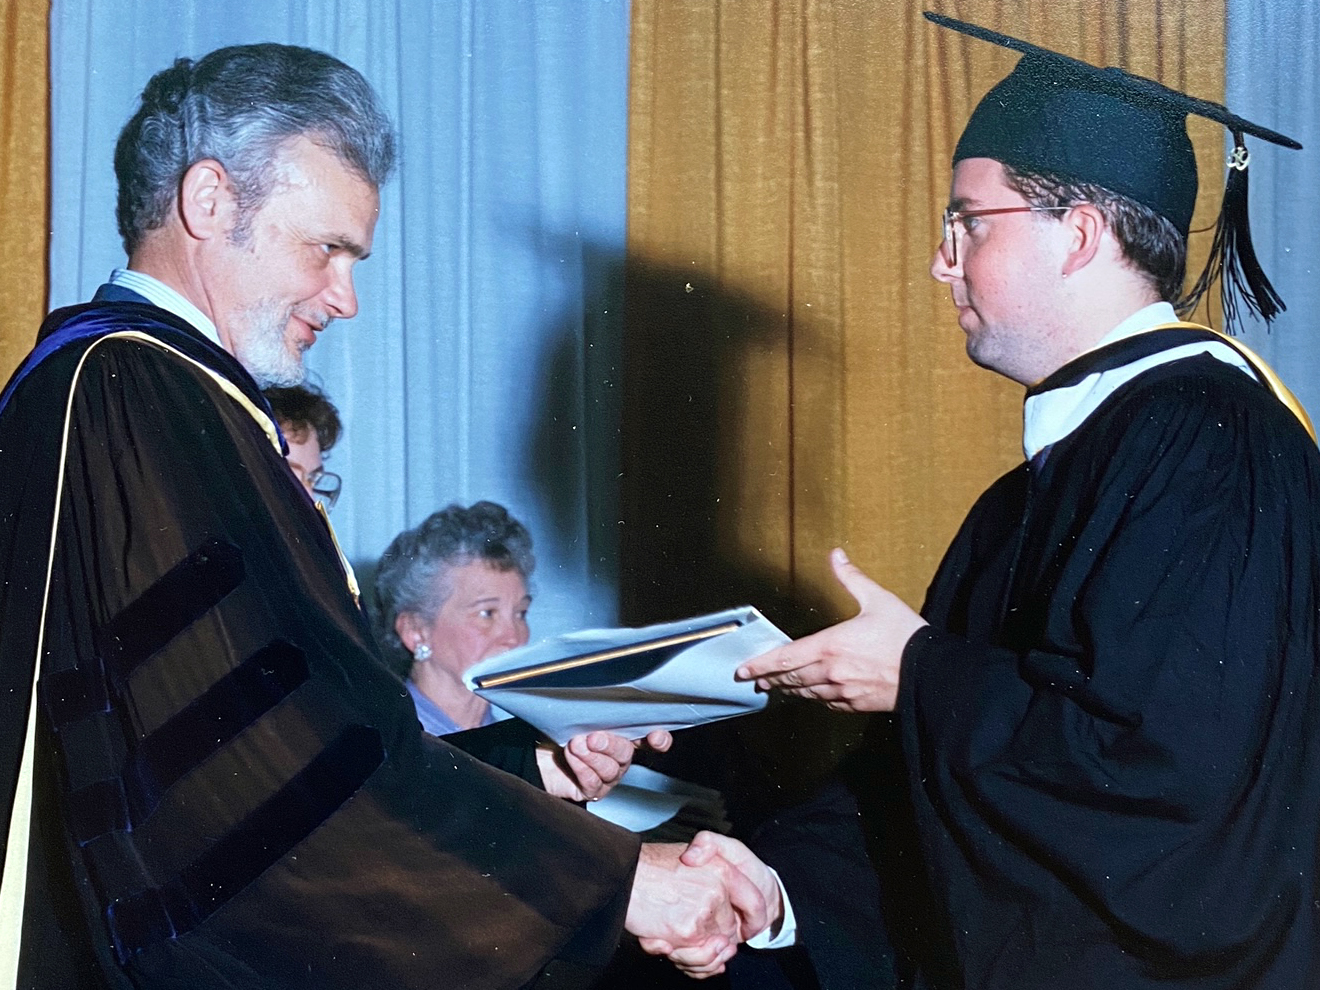 Cahill receives his undergraduate degree